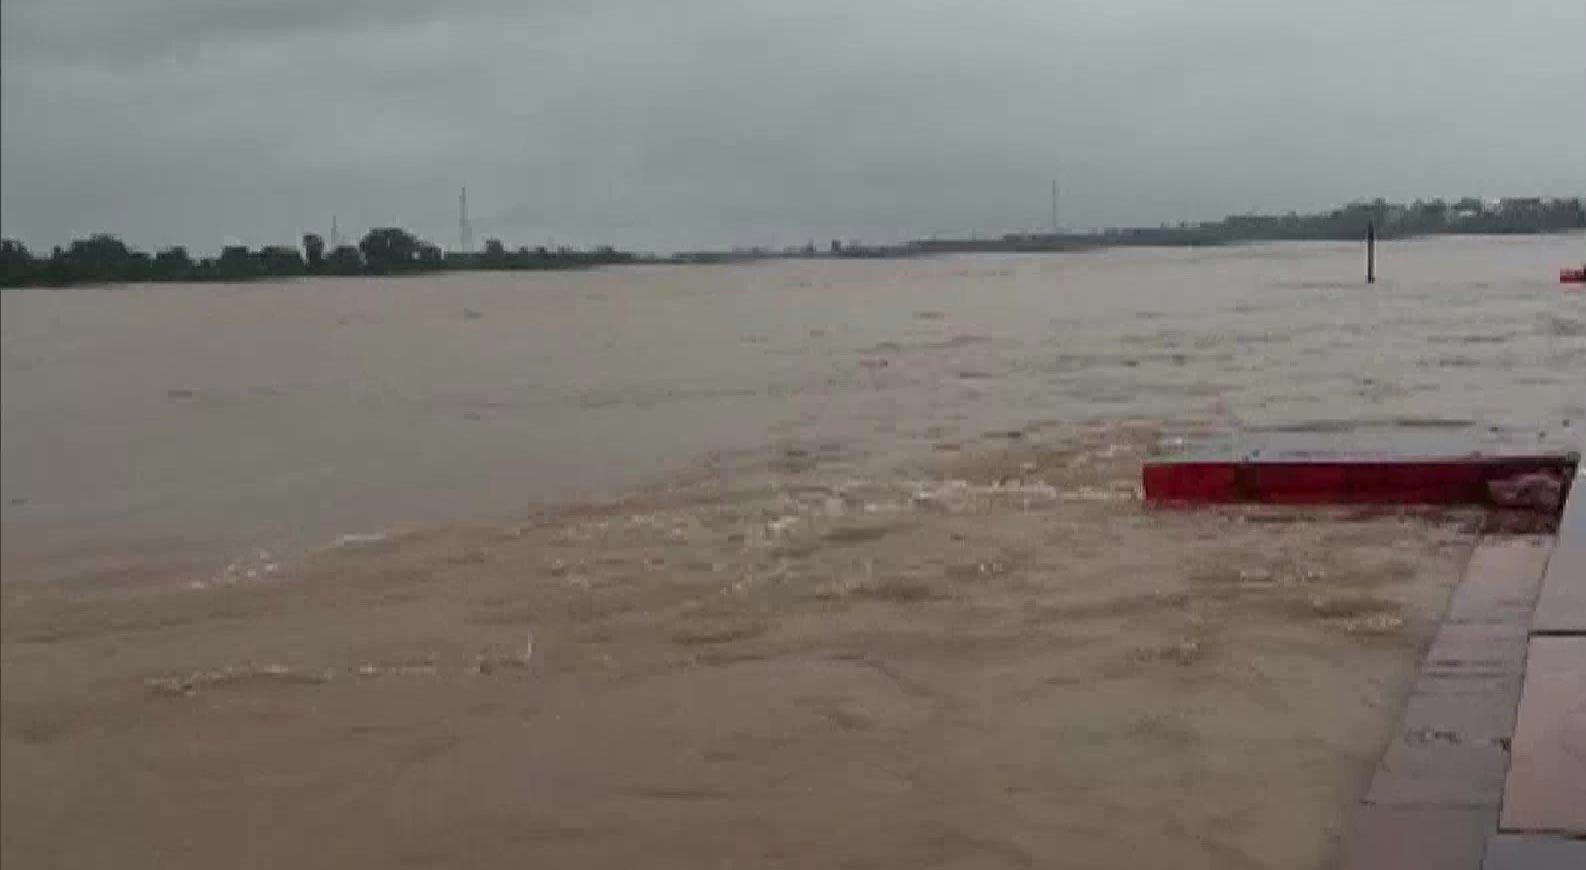 Flood alerts issued: పలు రాష్ట్రాల్లో డేంజర్ లెవెల్‌లో ప్రవహిస్తున్న నదులు...అలర్ట్